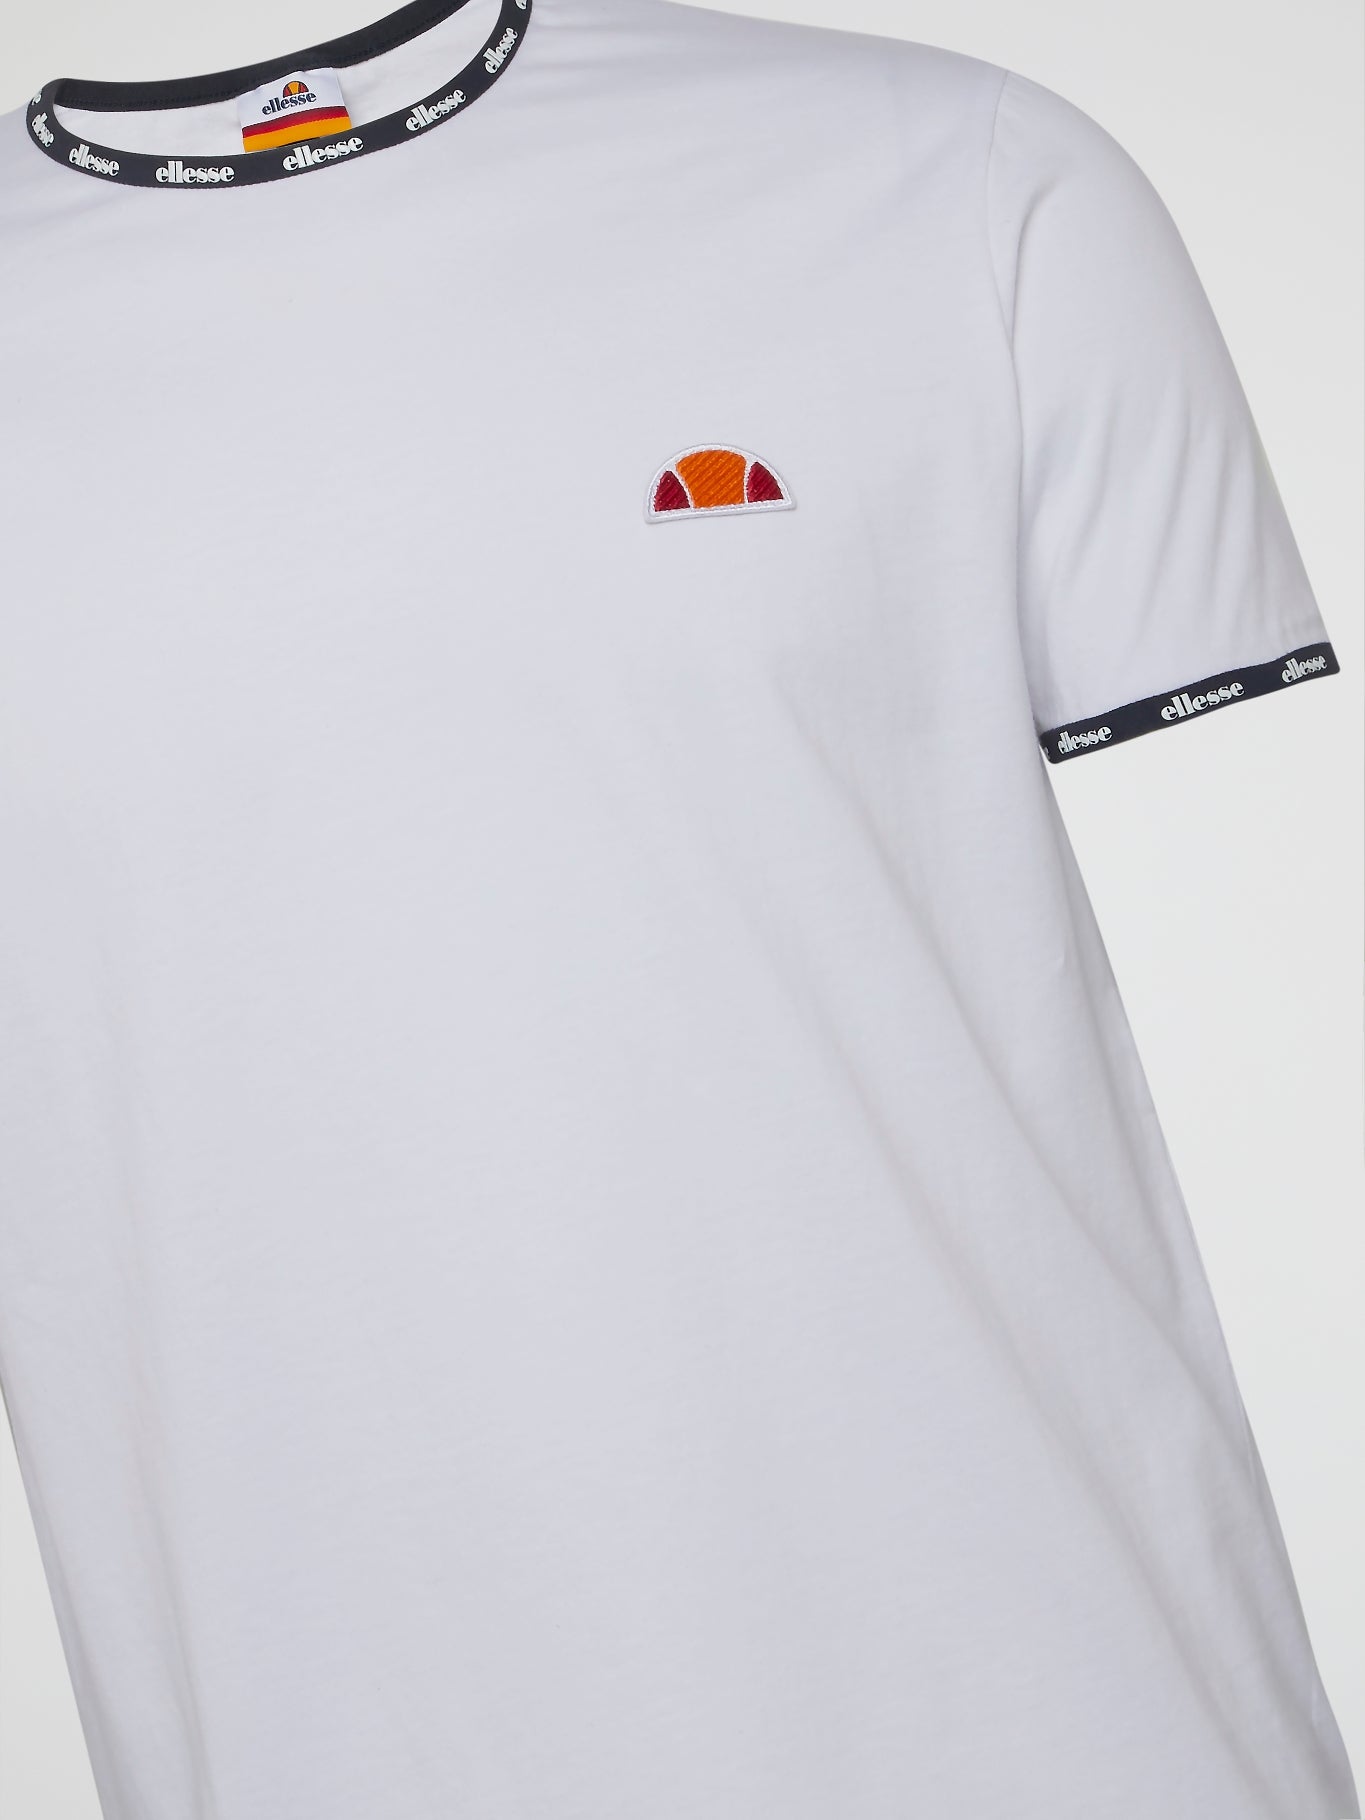 White – Global Eden Logo Trim Store T-Shirt Maison-B-More